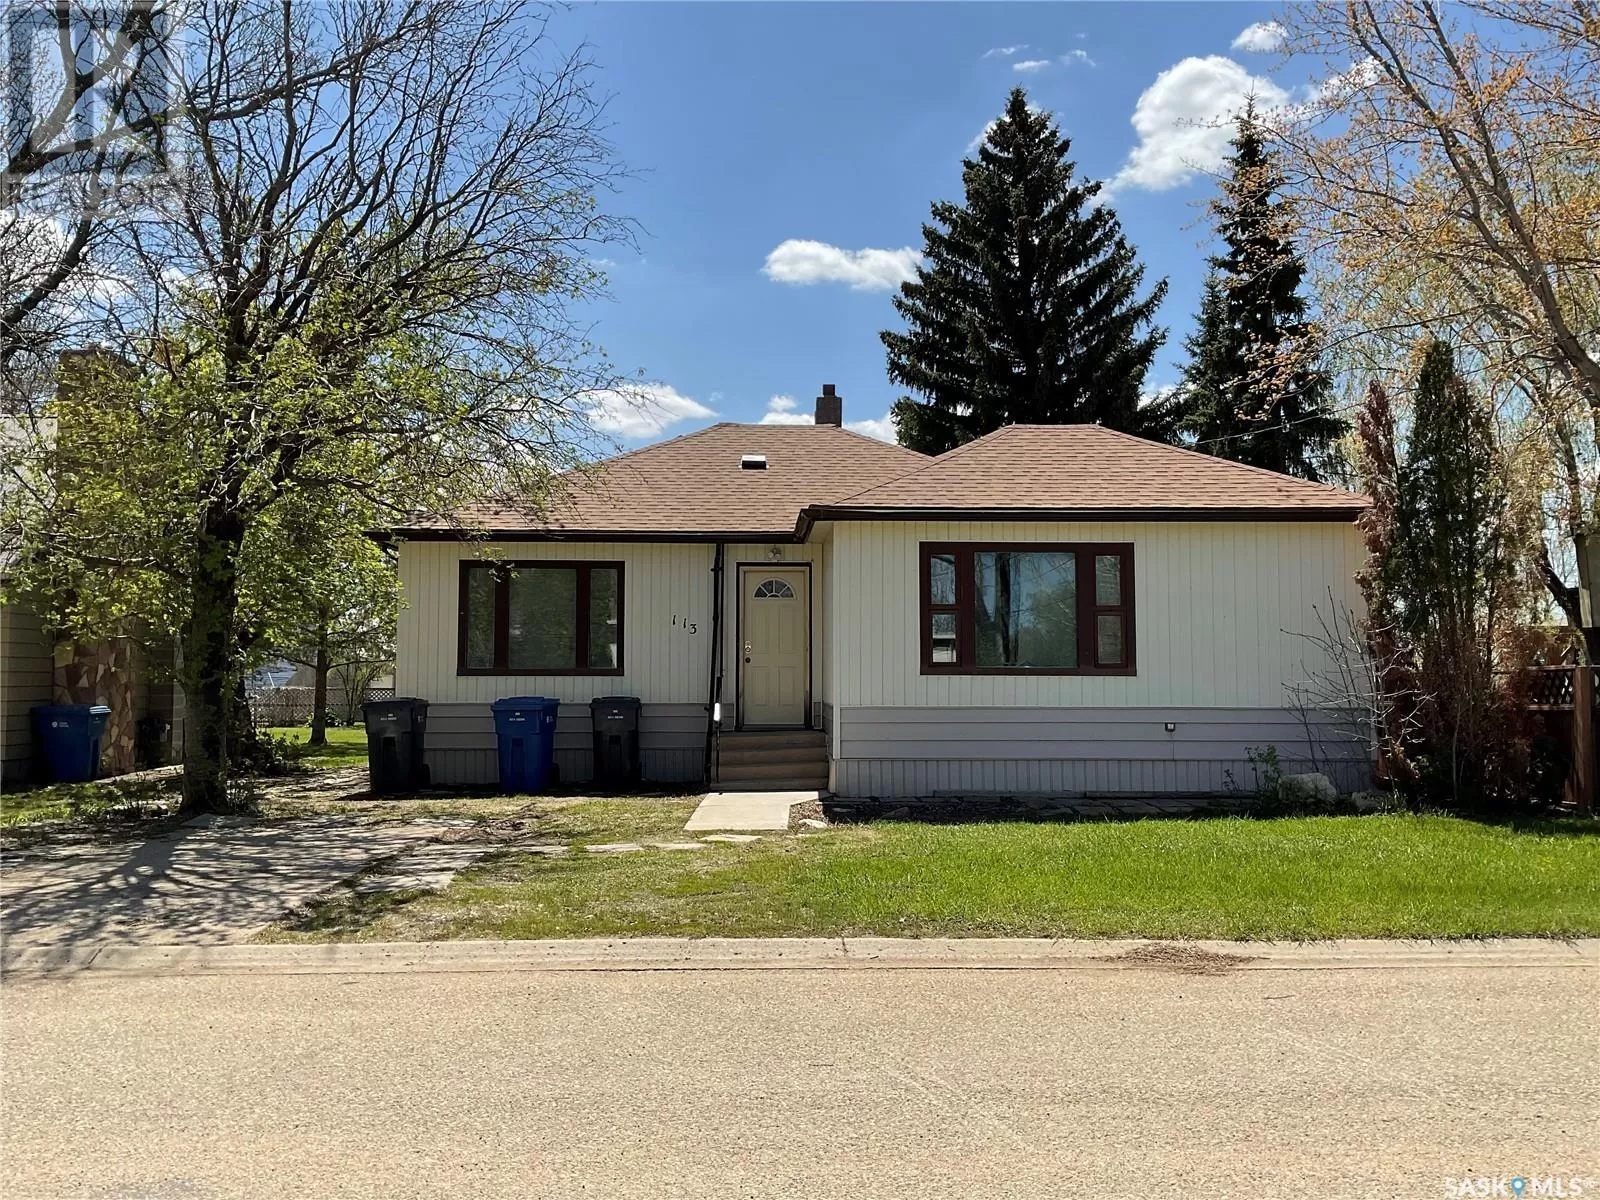 House for rent: 113 Prospect Avenue, Oxbow, Saskatchewan S0C 2B0